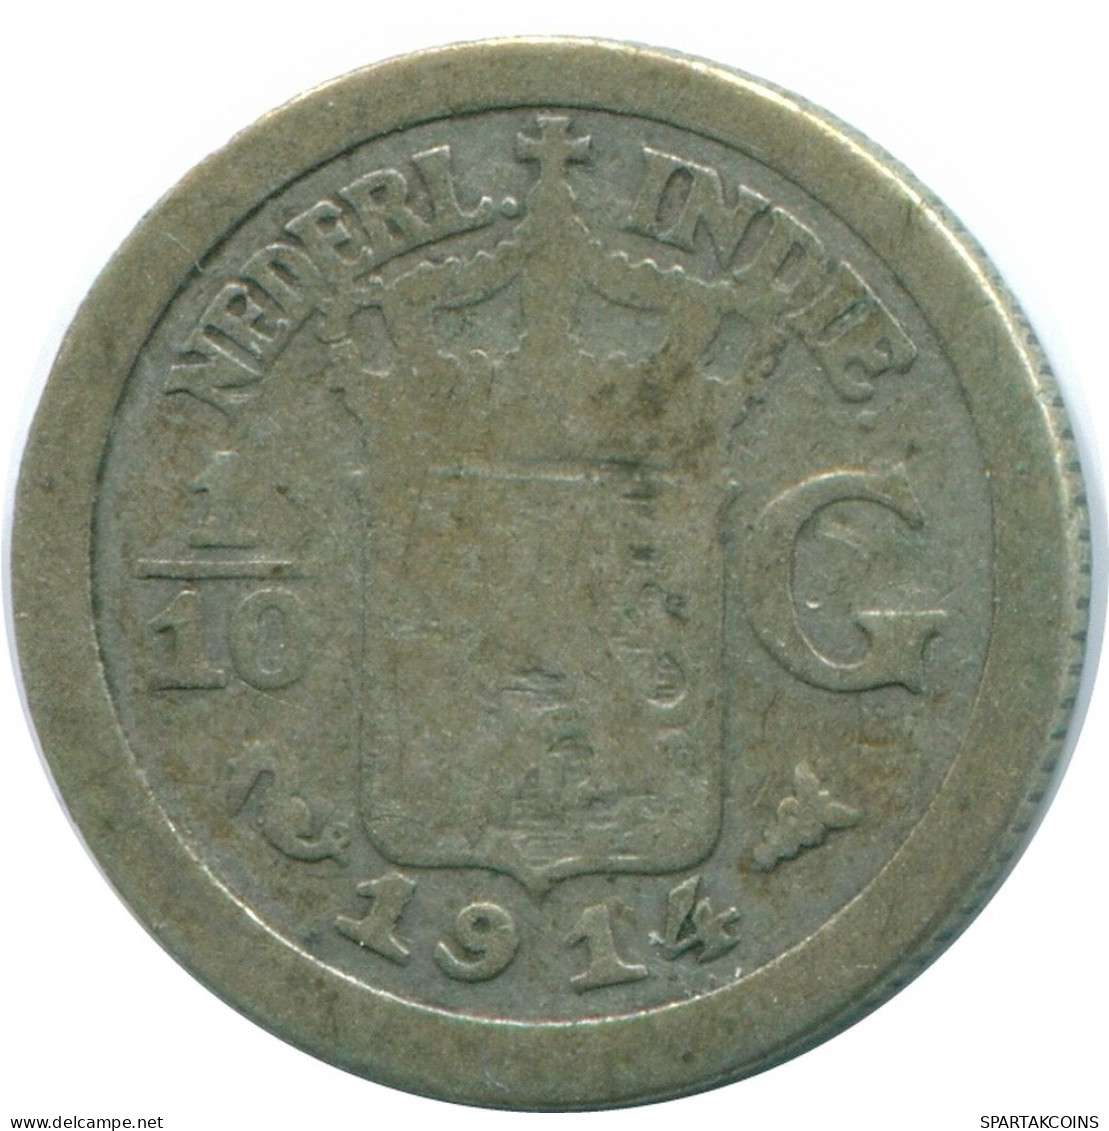 1/10 GULDEN 1914 INDIAS ORIENTALES DE LOS PAÍSES BAJOS PLATA #NL13303.3.E.A - Indes Néerlandaises